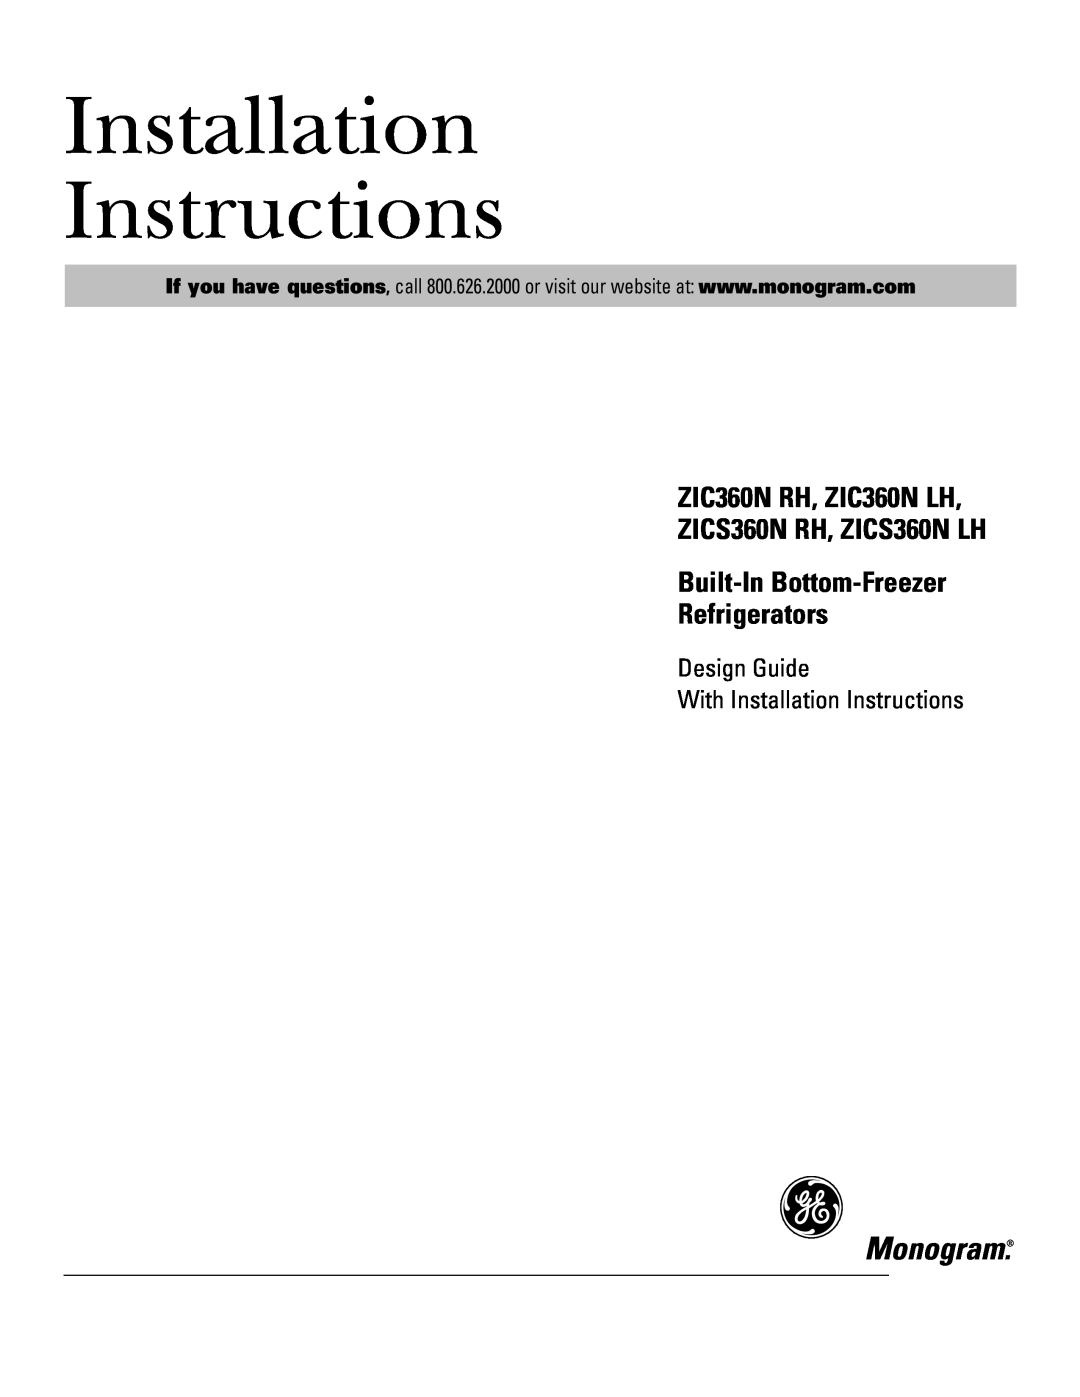 GE Monogram ZICS360 LH installation instructions Monogram, Installation Instructions 